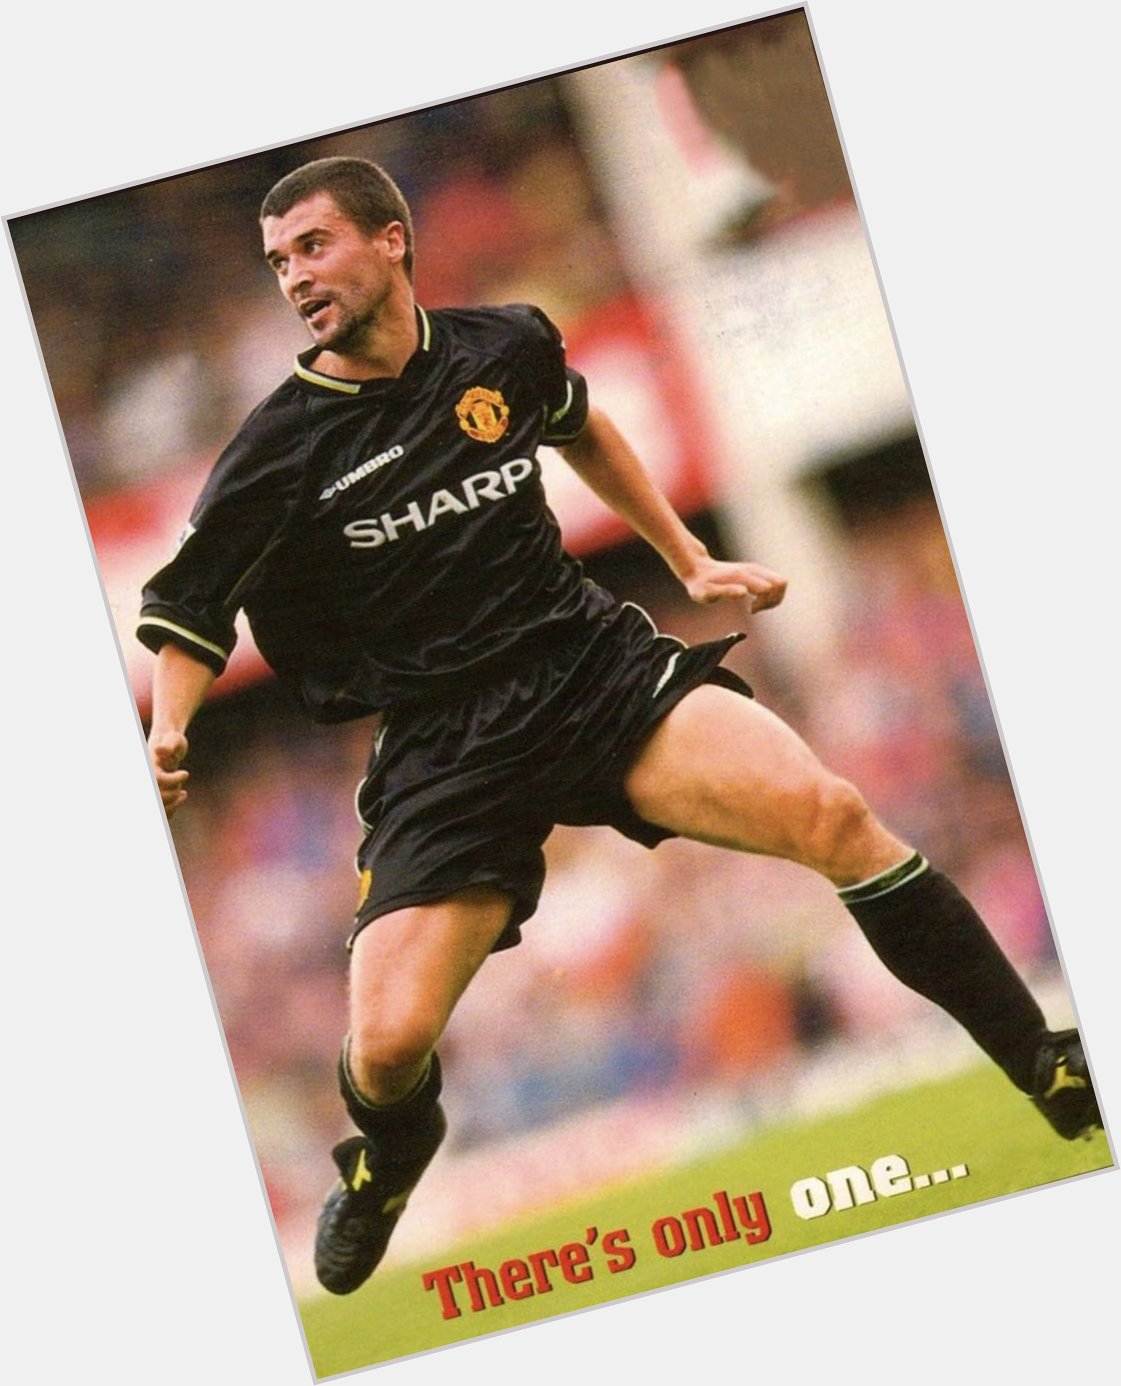 Happy Birthday Roy Keane (48) 

Wish we had a prime Keane playing behind Pogba 